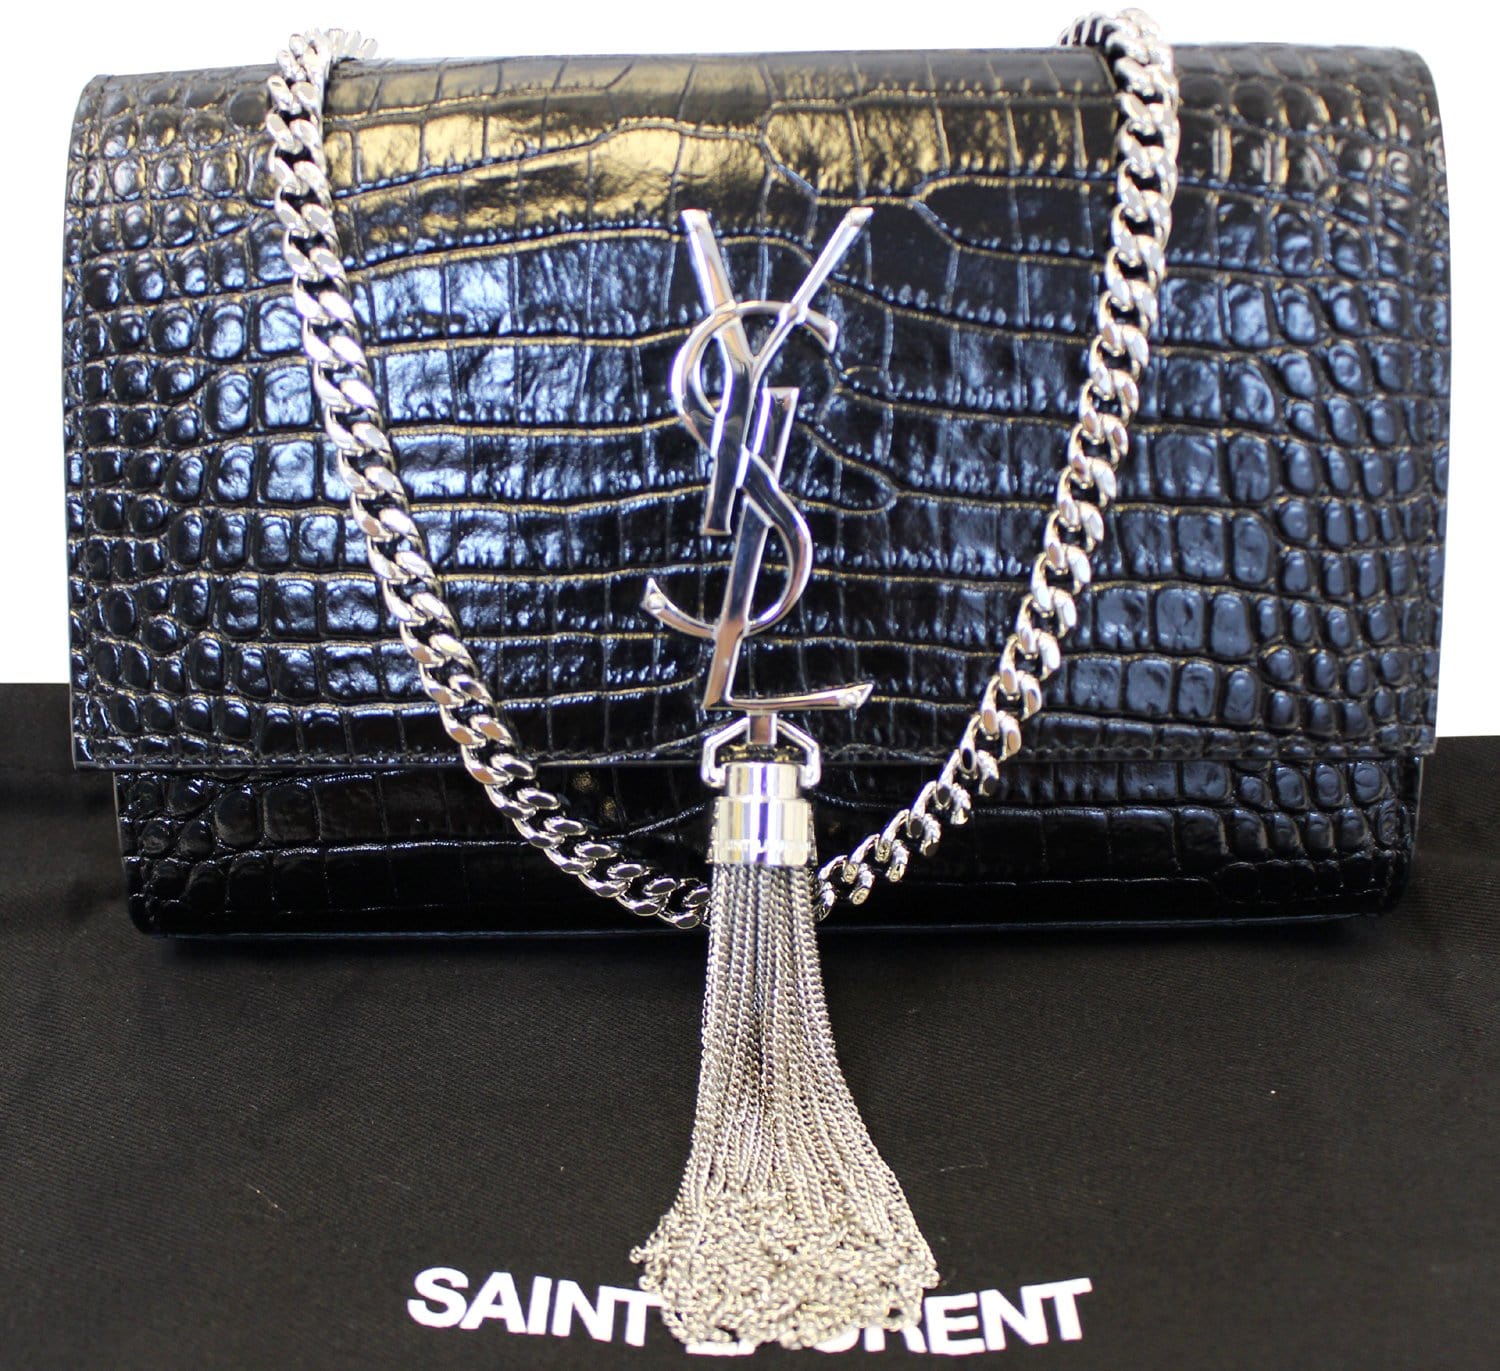 Yves Saint Laurent Handbag - Silver - Coleção - Vania's Change